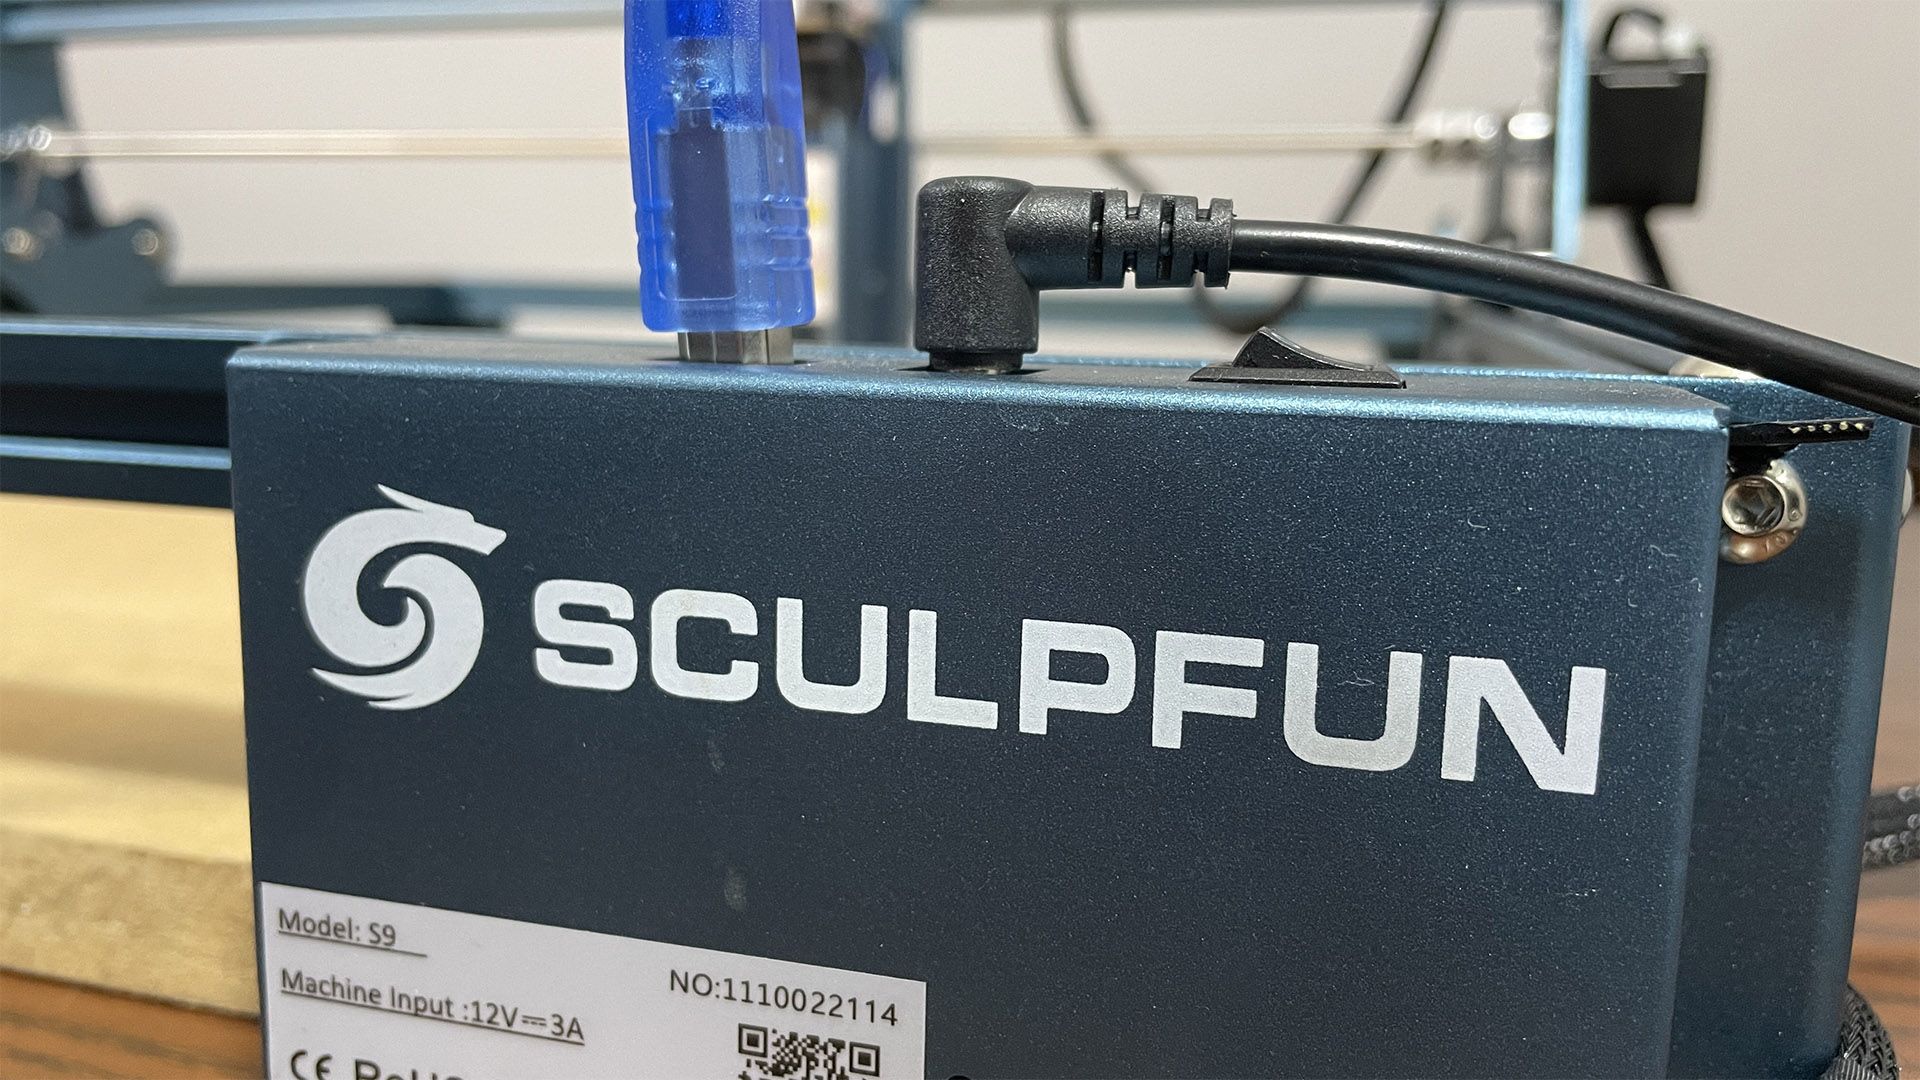 Sculpfun Logo on Laser Engraving Machine With Depth of Field